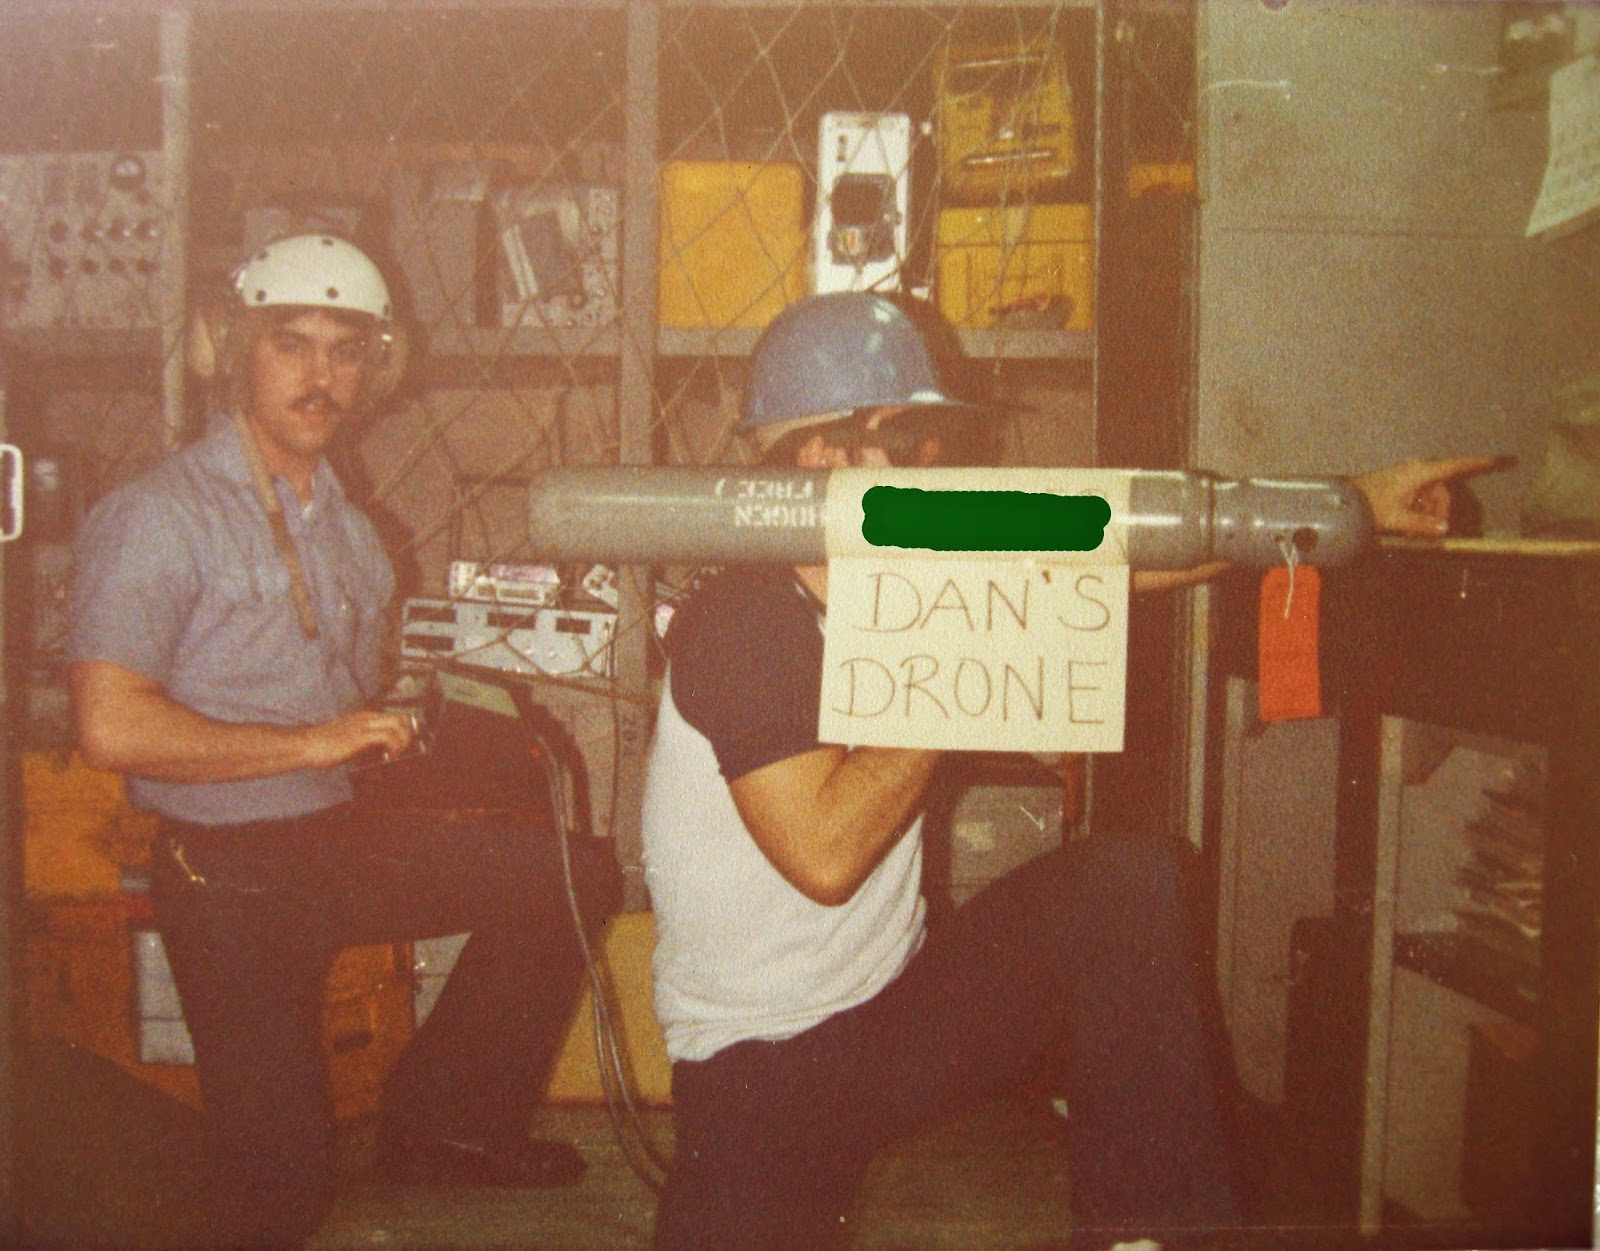 Jeff S. & Tommy Mondello aiming "Dan's Drone" towards Khadafy 1983